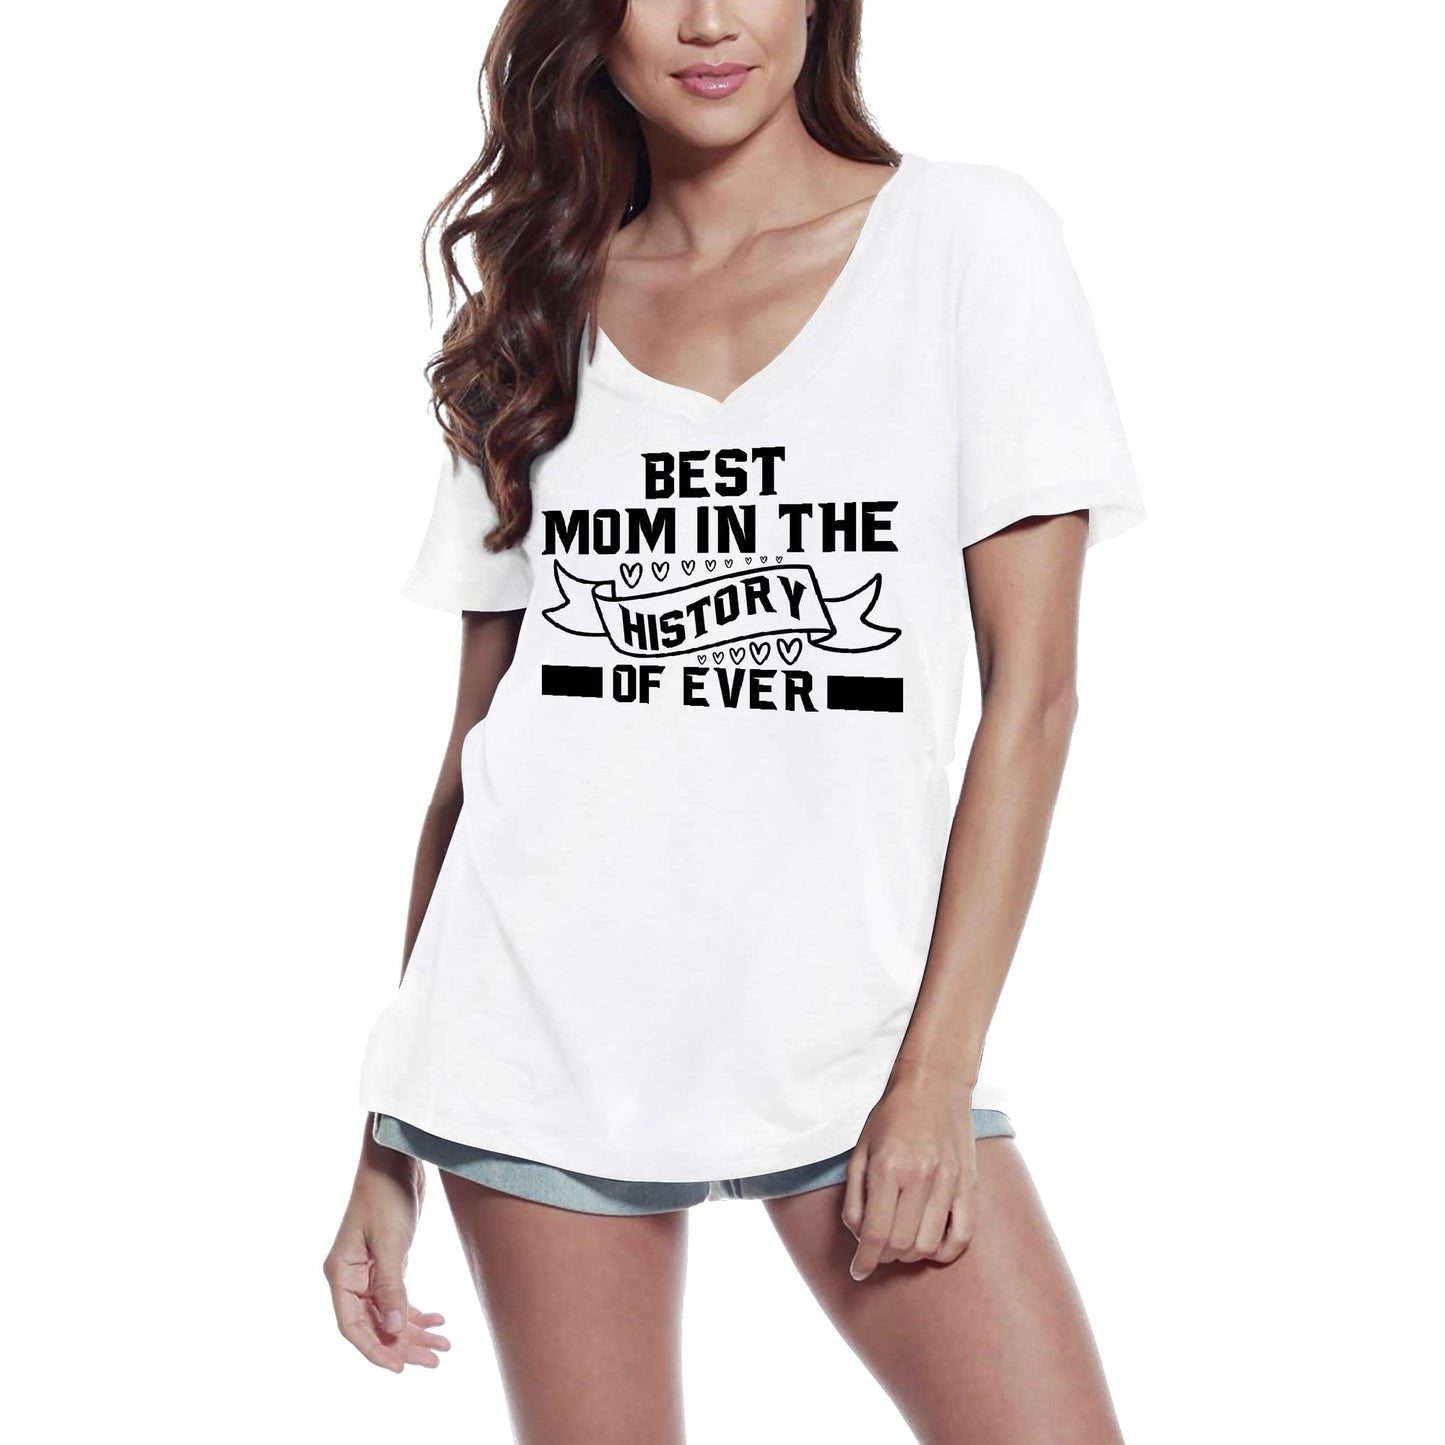 ULTRABASIC Women's T-Shirt Best Mom in the History of Ever - Short Sleeve Tee Shirt Tops